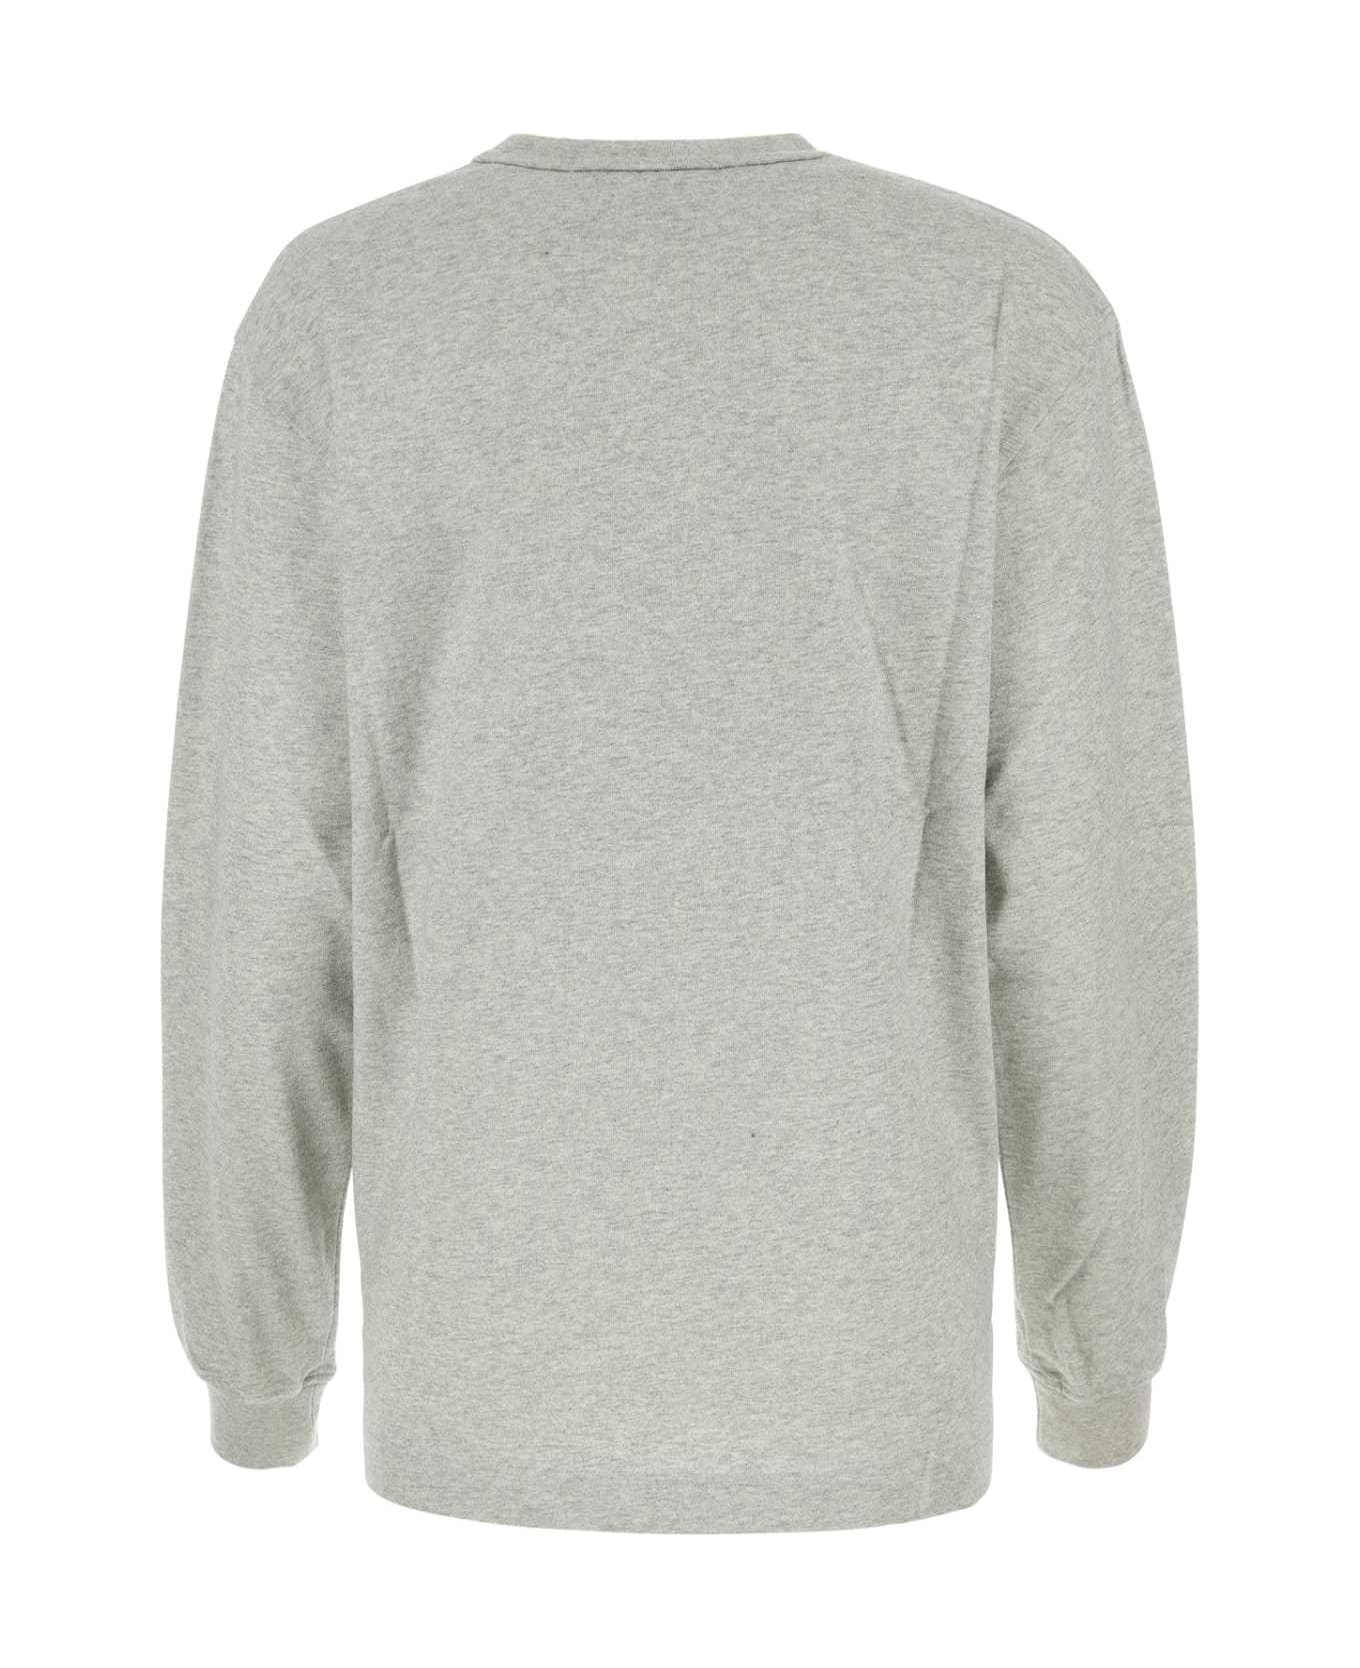 Alexander Wang Melange Grey Cotton Oversize T-shirt - LIGHTHEATHERGREY